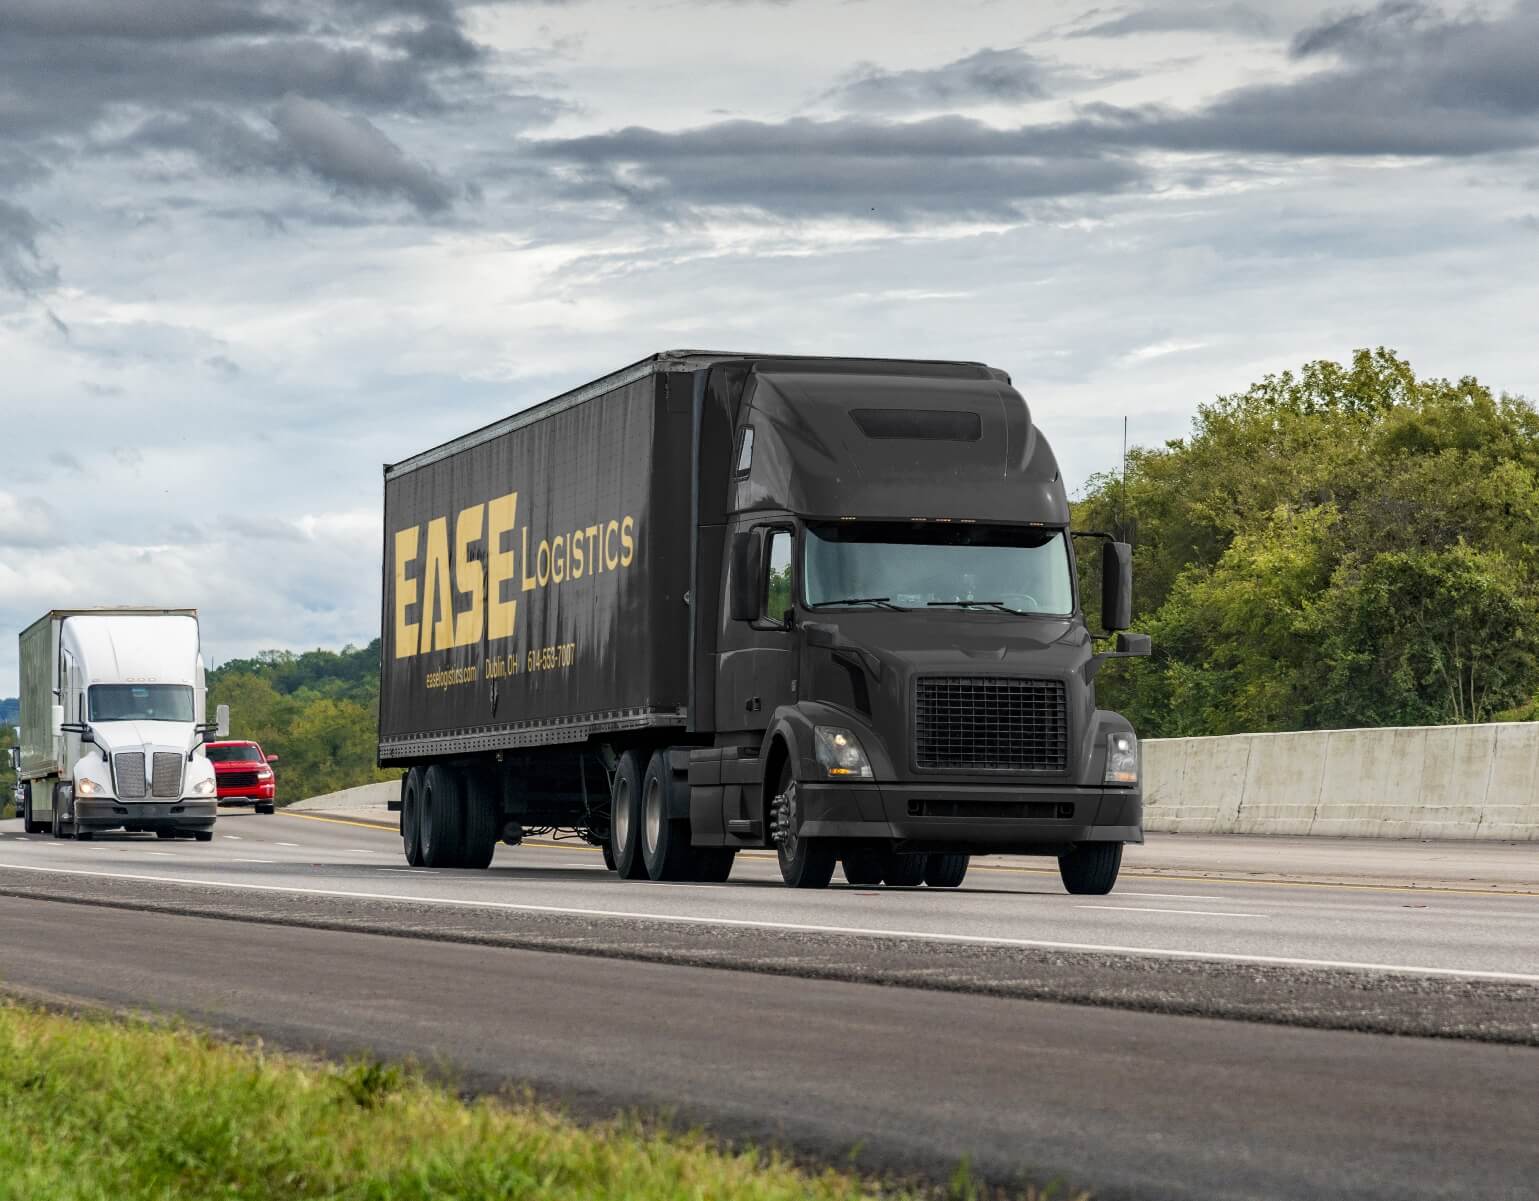 Black FTL truck with EASE Logistics logo